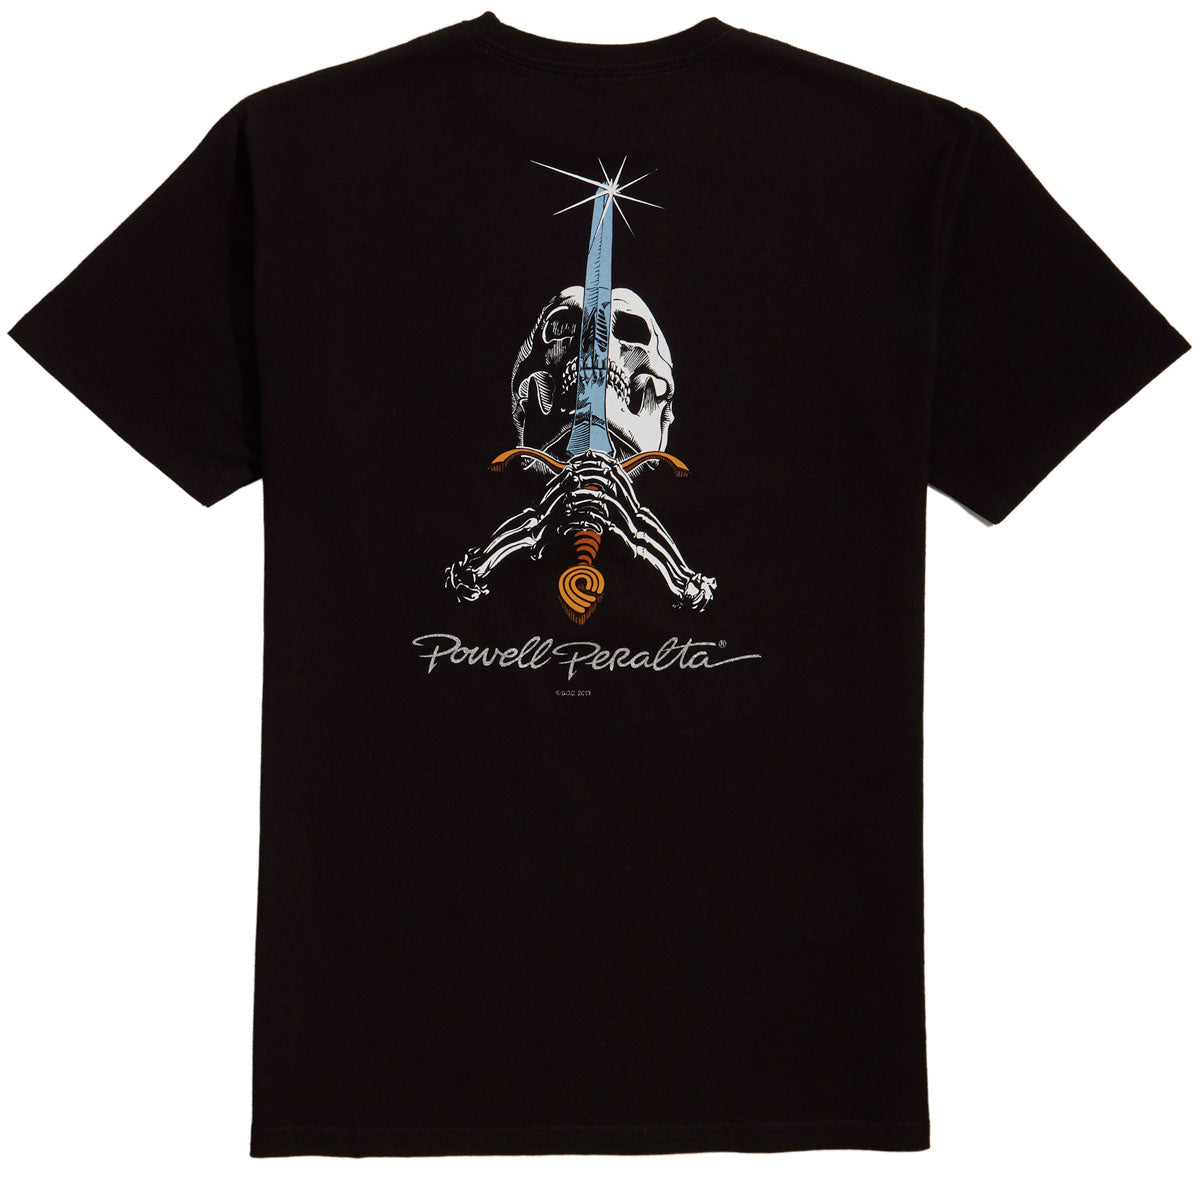 Powell-Peralta Skull and Sword T-Shirt - Black image 1